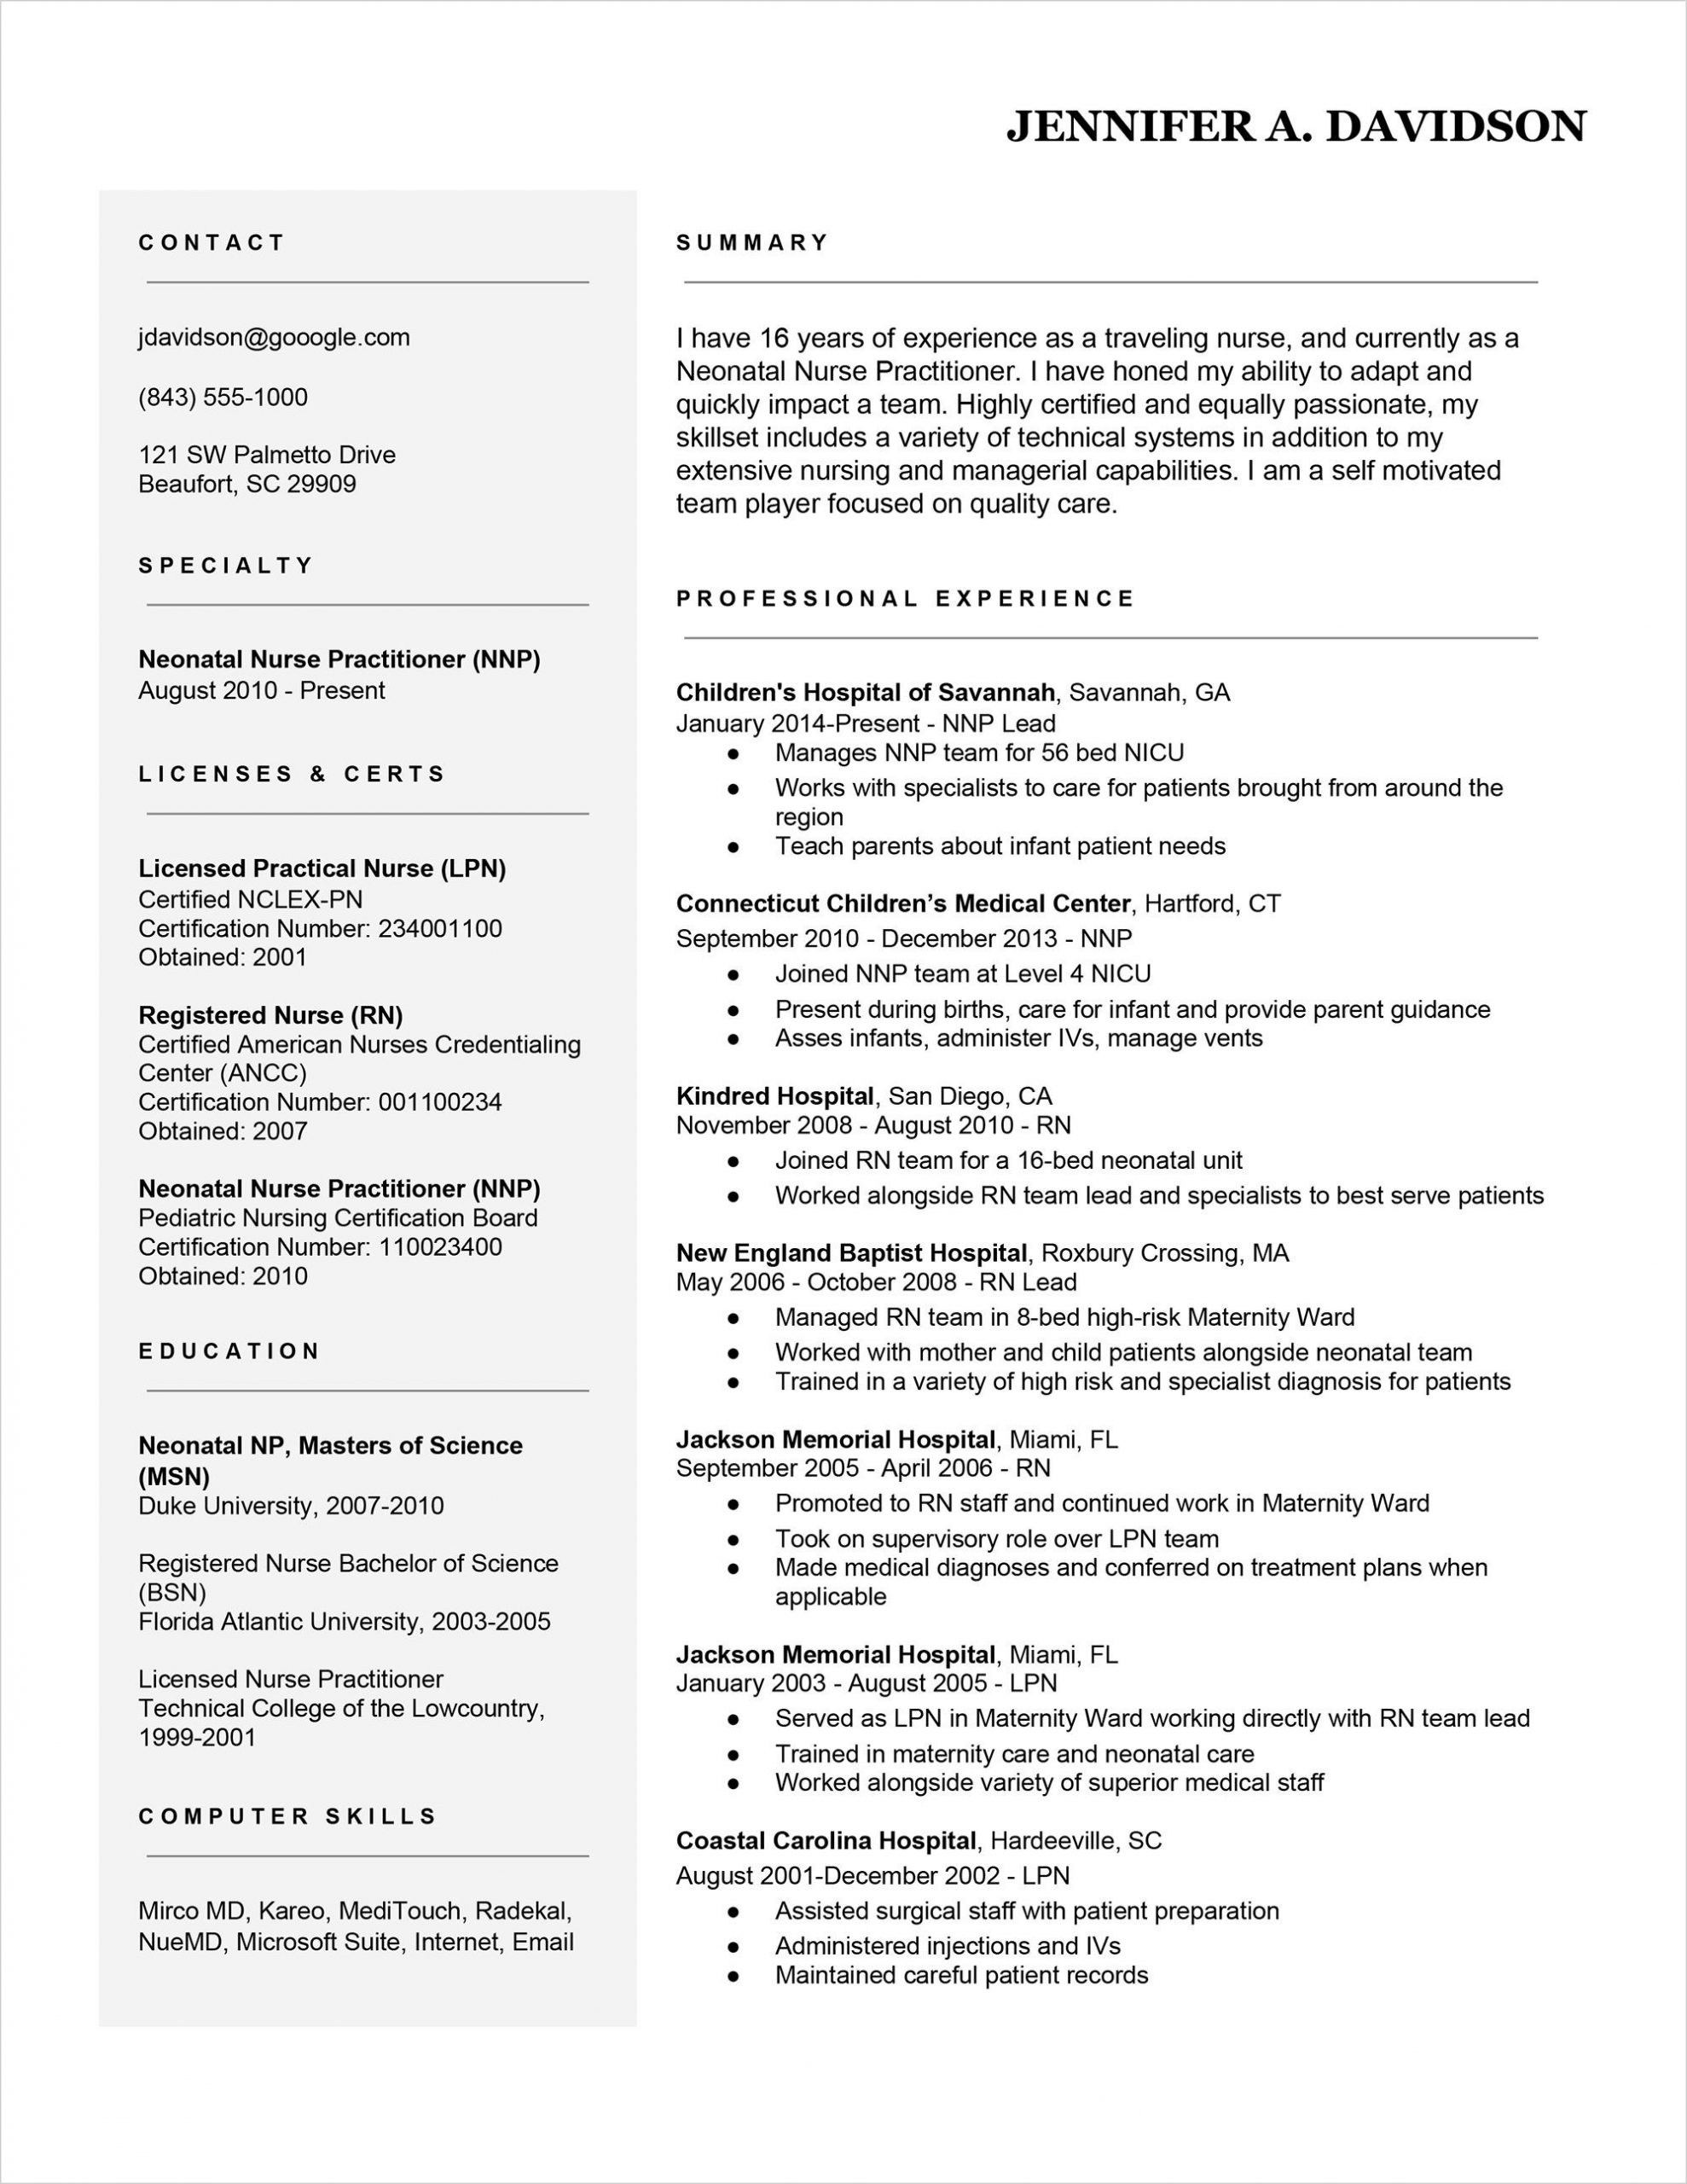 1144 resume templates for licensed practical nurse